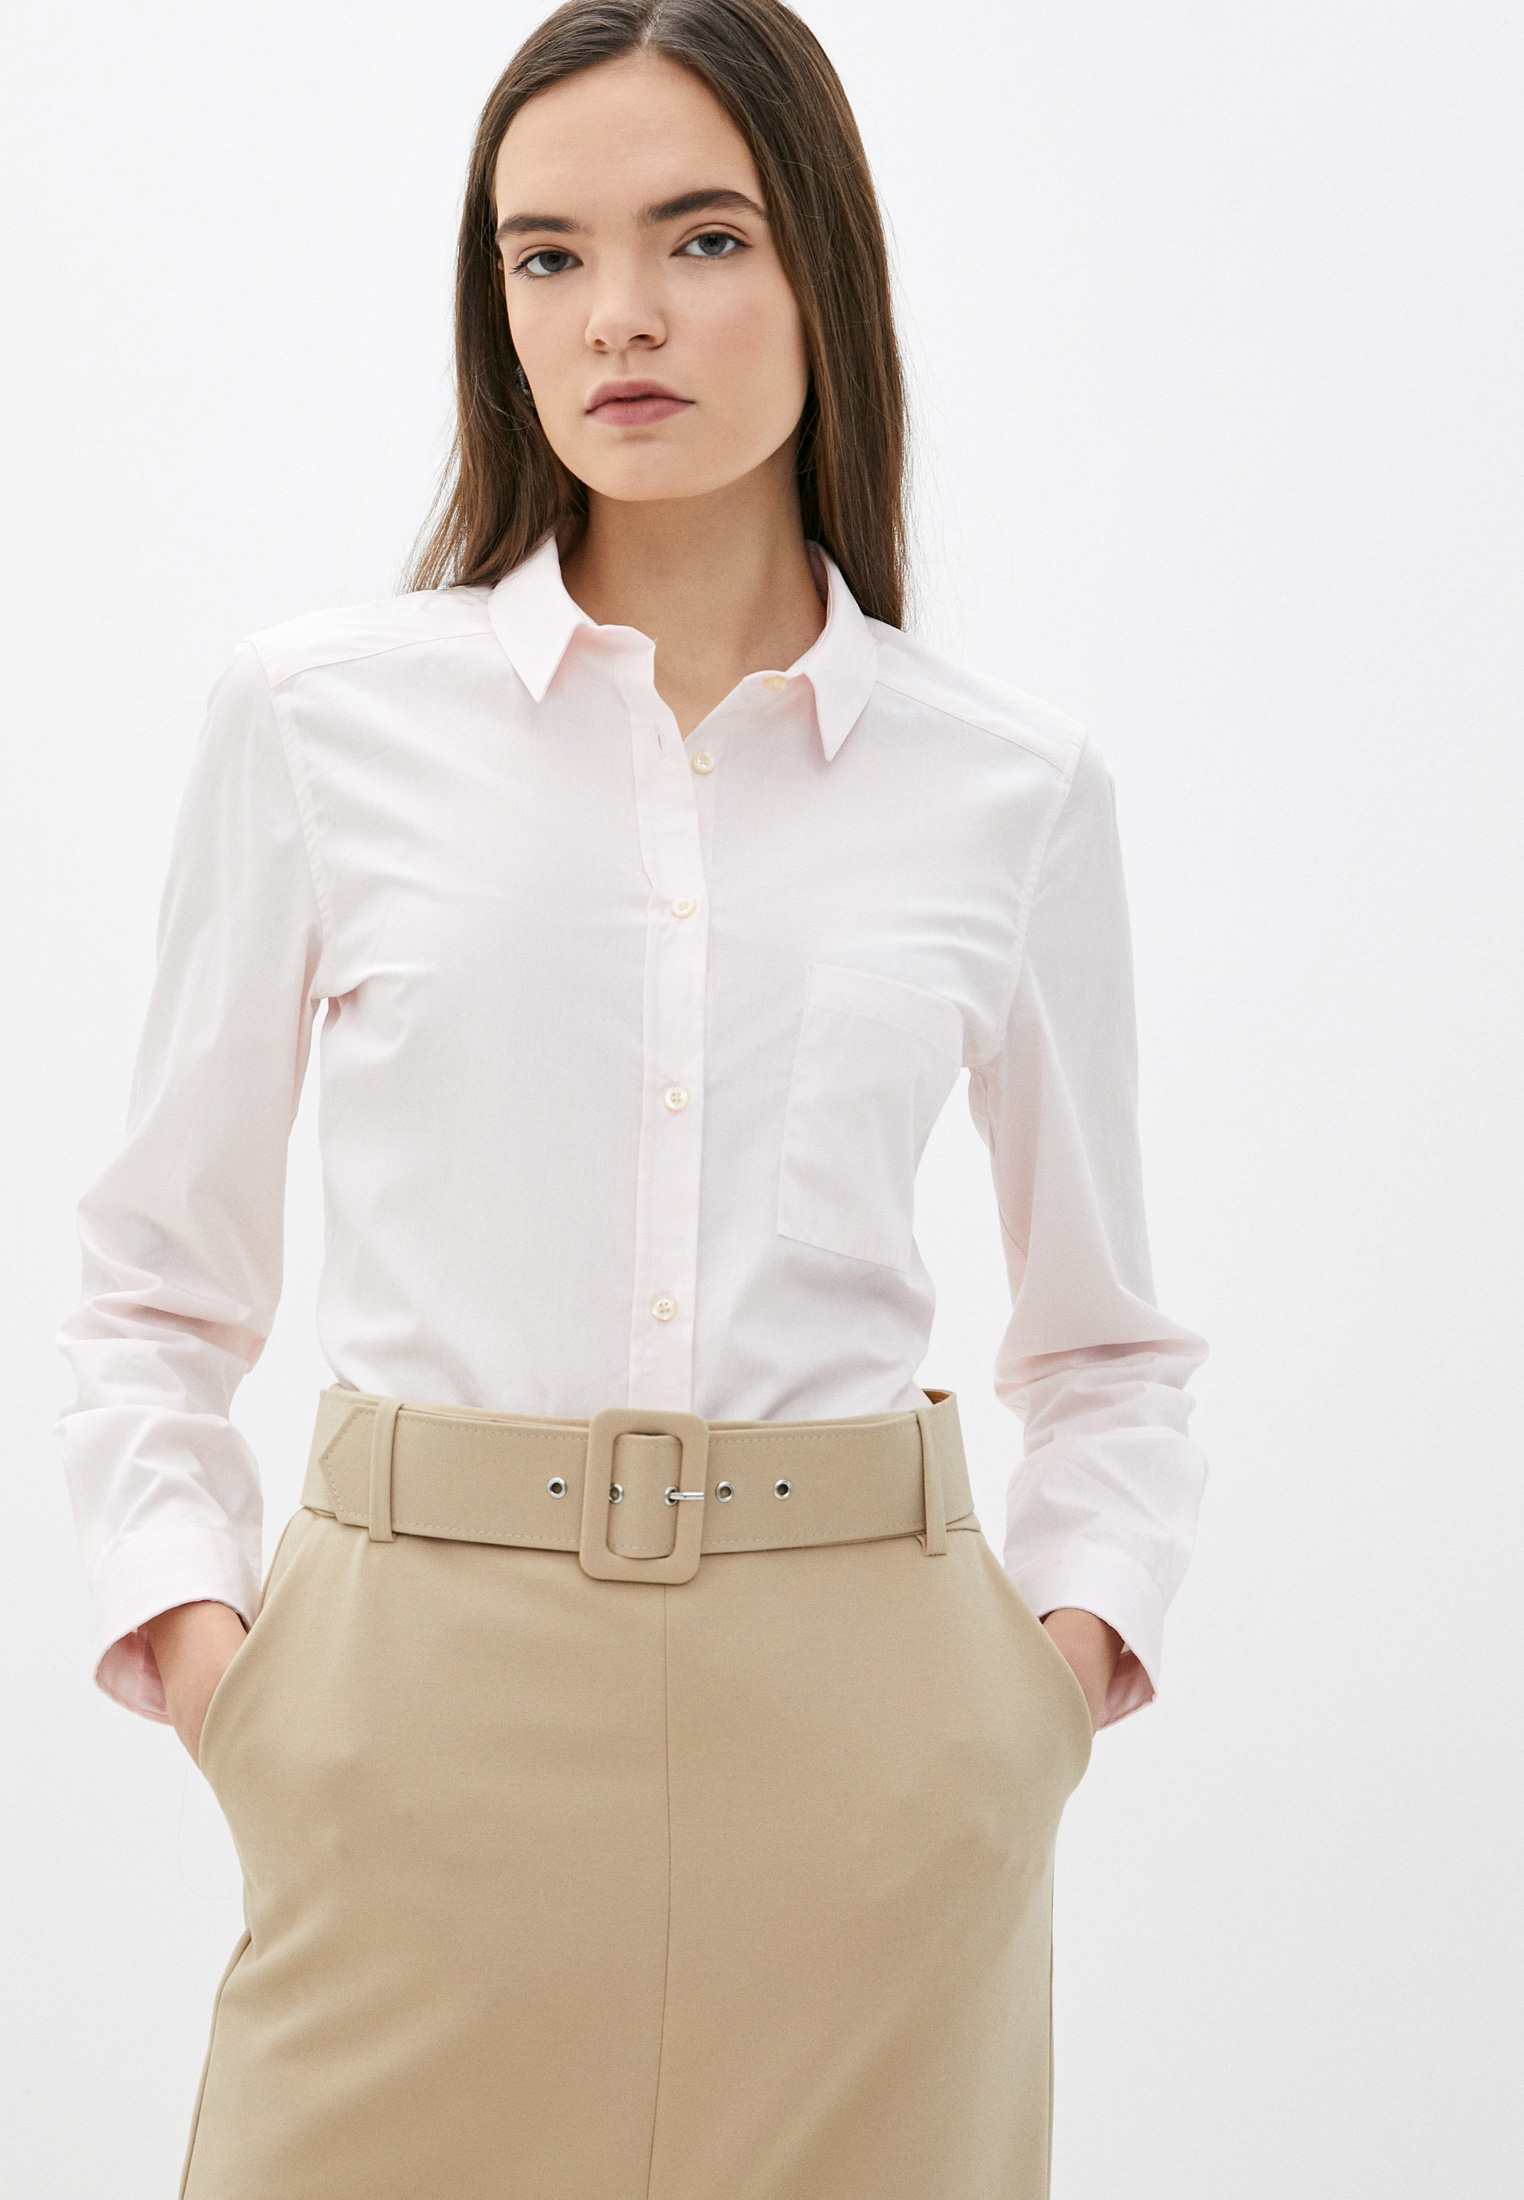 Женские рубашки с длинным рукавом Basics & More Рубашка Basics & More